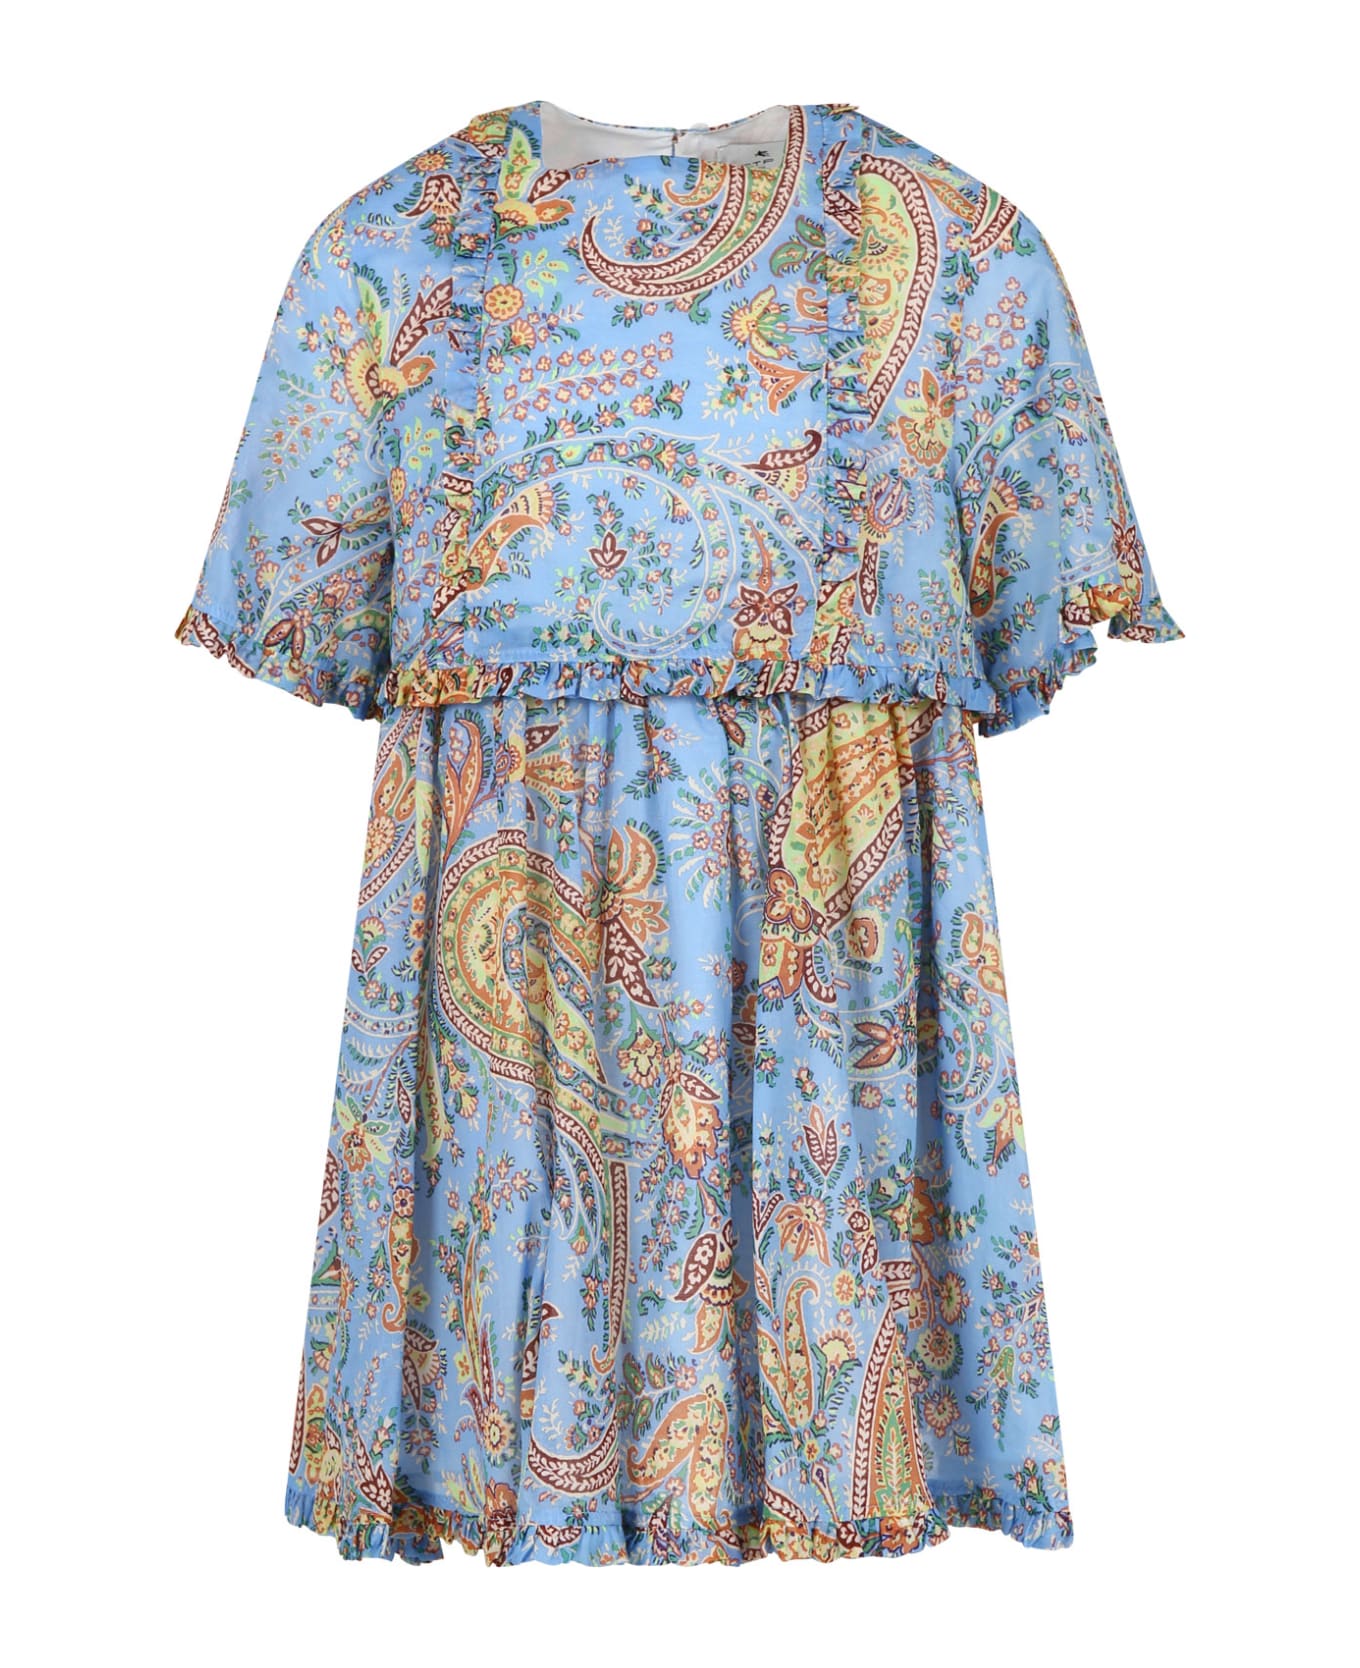 Etro Light Blue Dress For Girl With Paisley Pattern - Light Blue